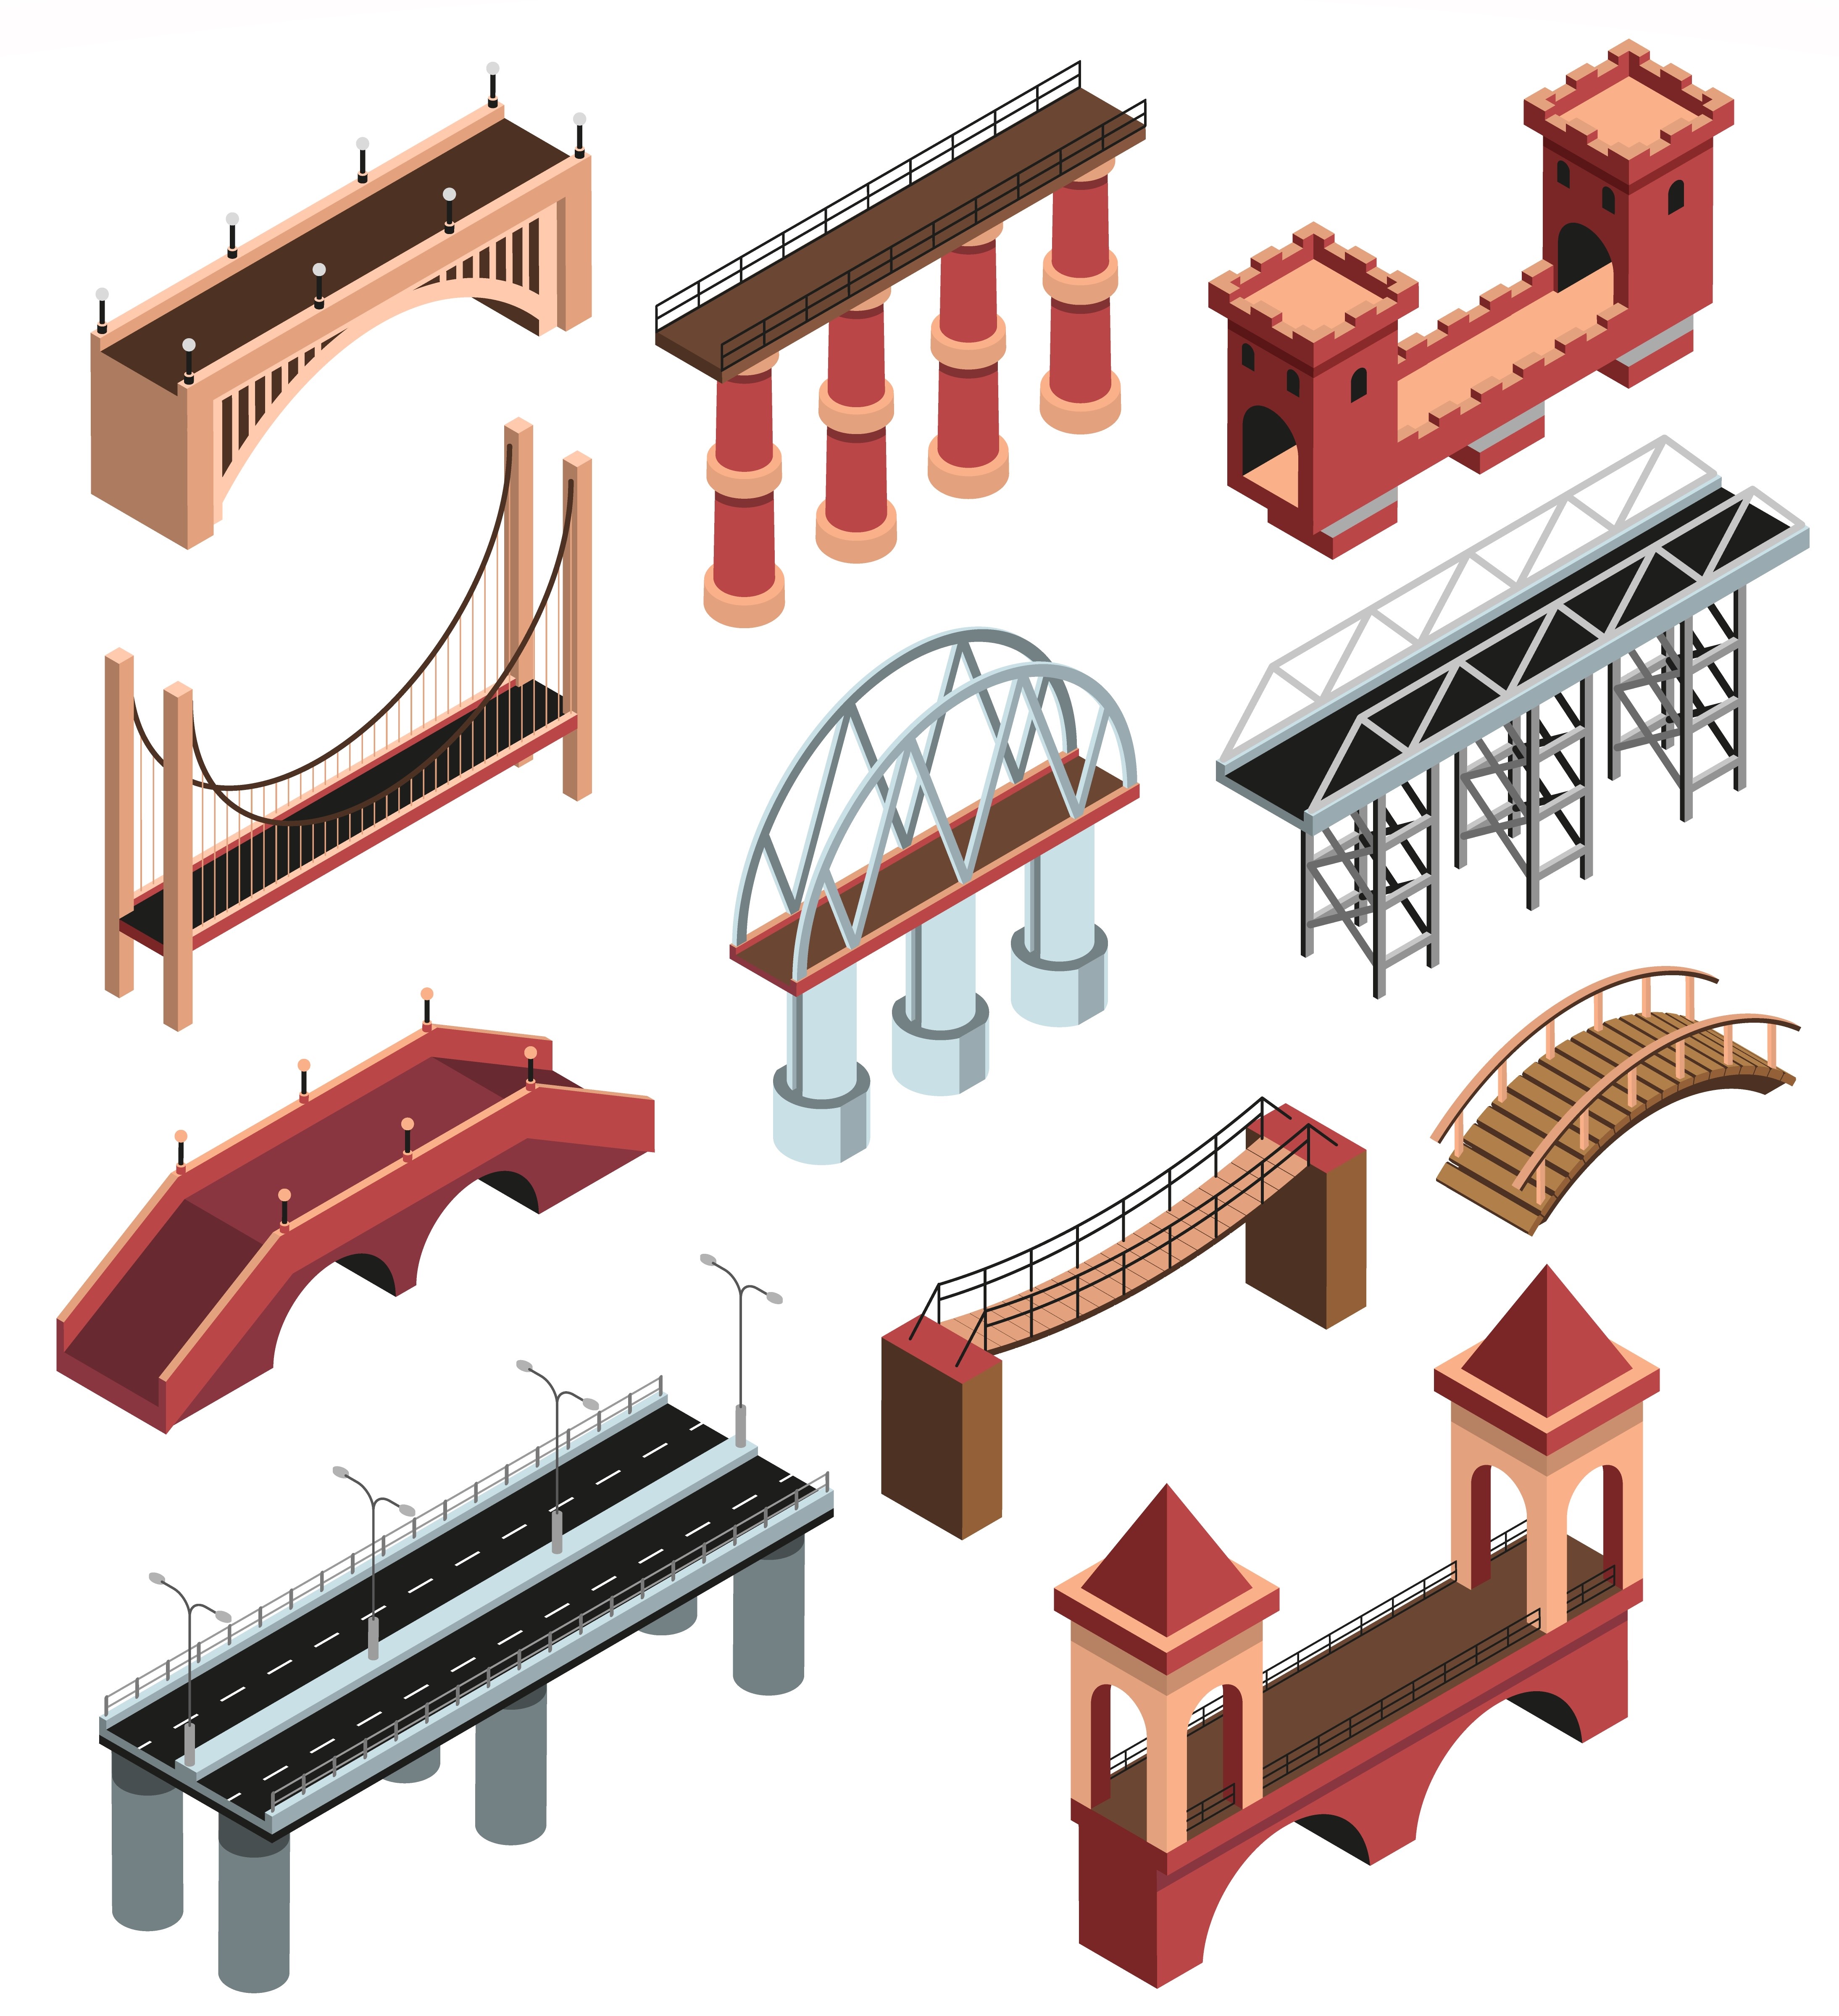 <a href="https://www.civilengineerdwg.com/"><img src="Prosedur Pembuatan Konstruksi Miniature Jembatan Dimulai dari Tahap.jpg" alt="Prosedur Pembuatan Konstruksi Miniature Jembatan Dimulai dari Tahap Awal hingga Selesai"></a>